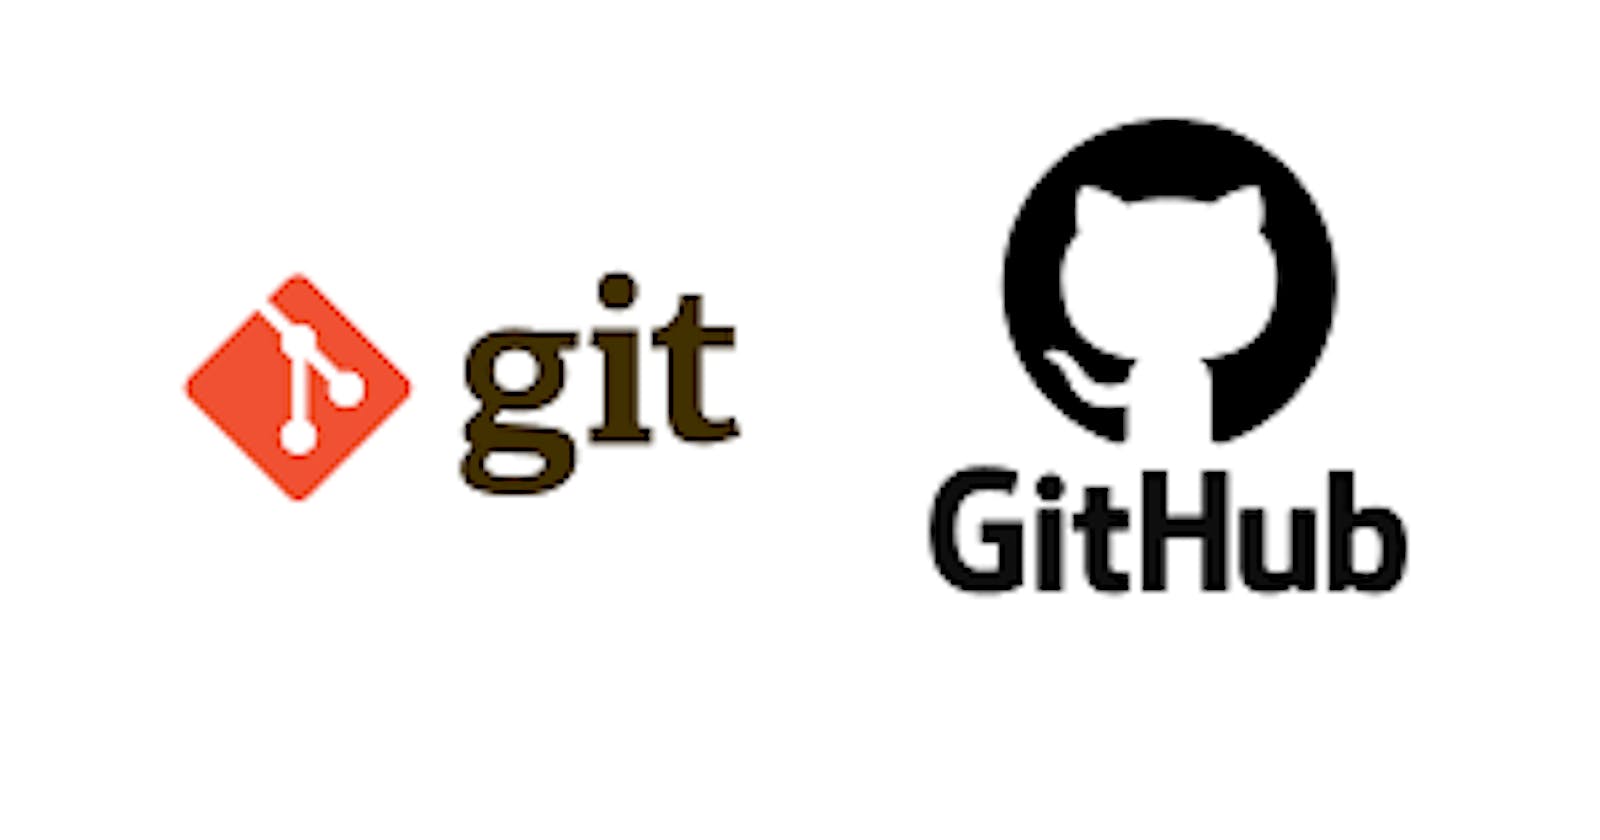 Day 9 Task: Deep Dive in Git & GitHub for DevOps Engineers.